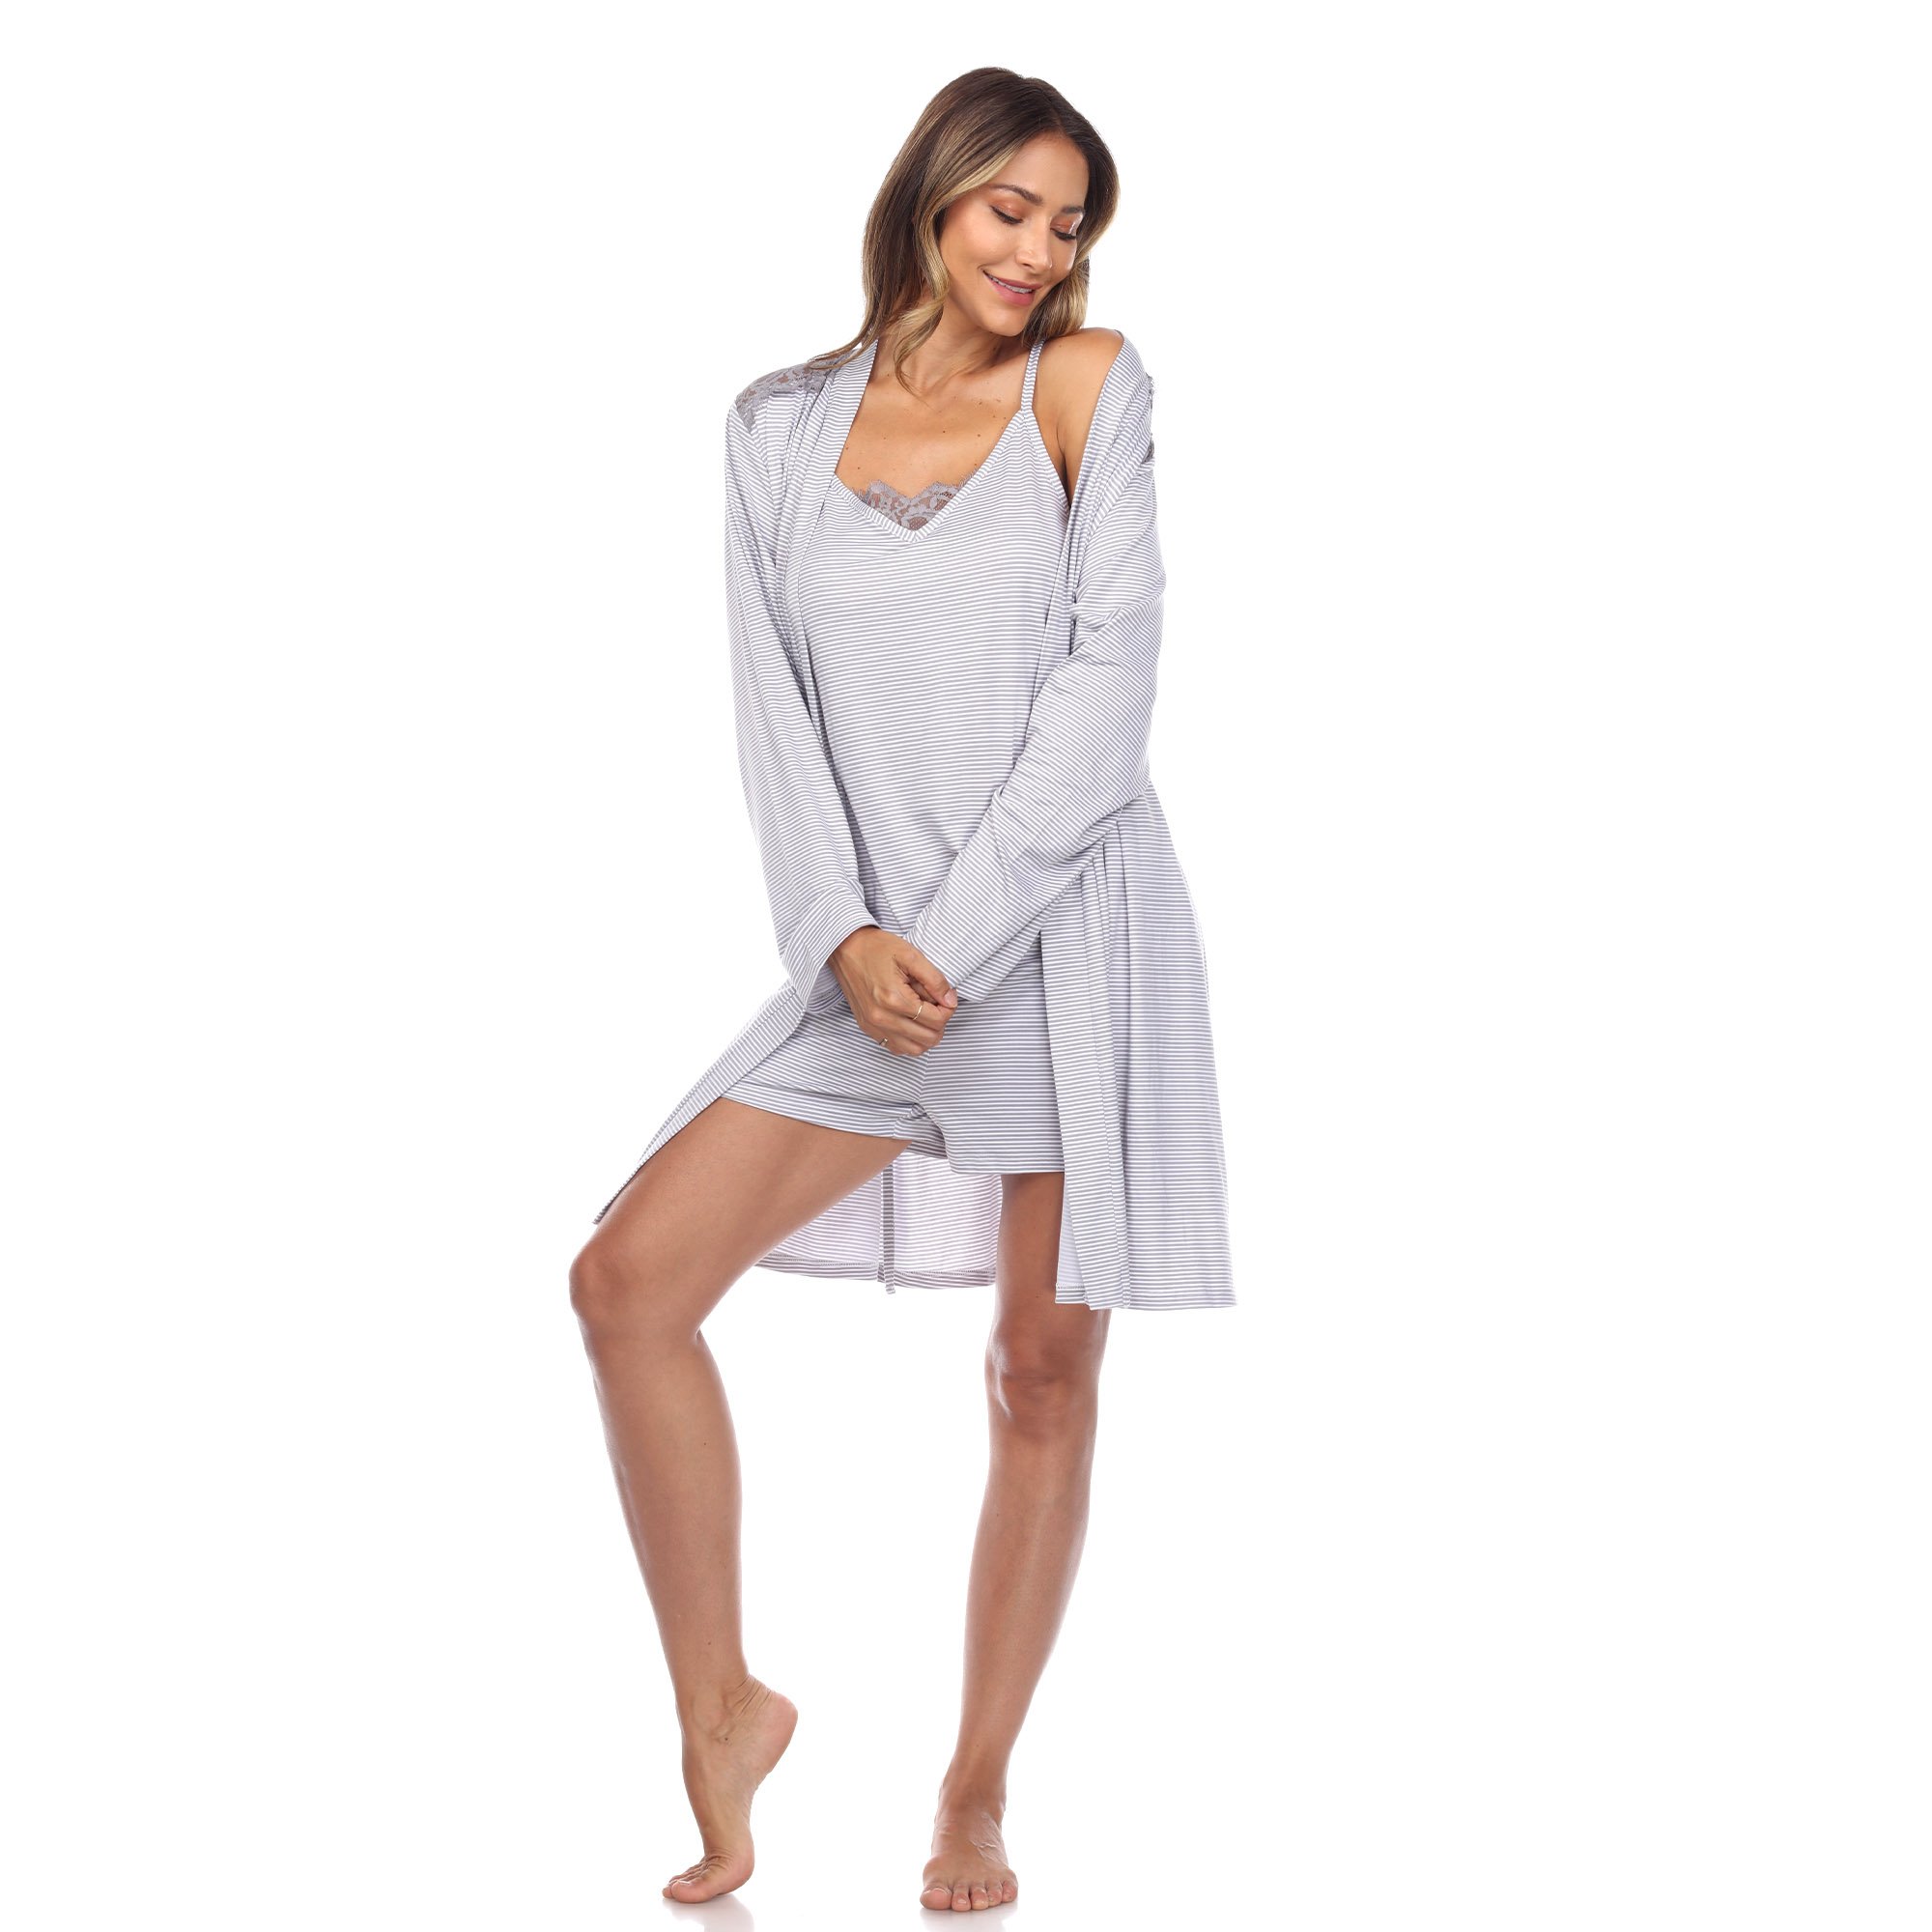 White Mark Women's 3-Piece Striped Camo Top, Shorts & Robe Matching Pajama Set - Grey, Small